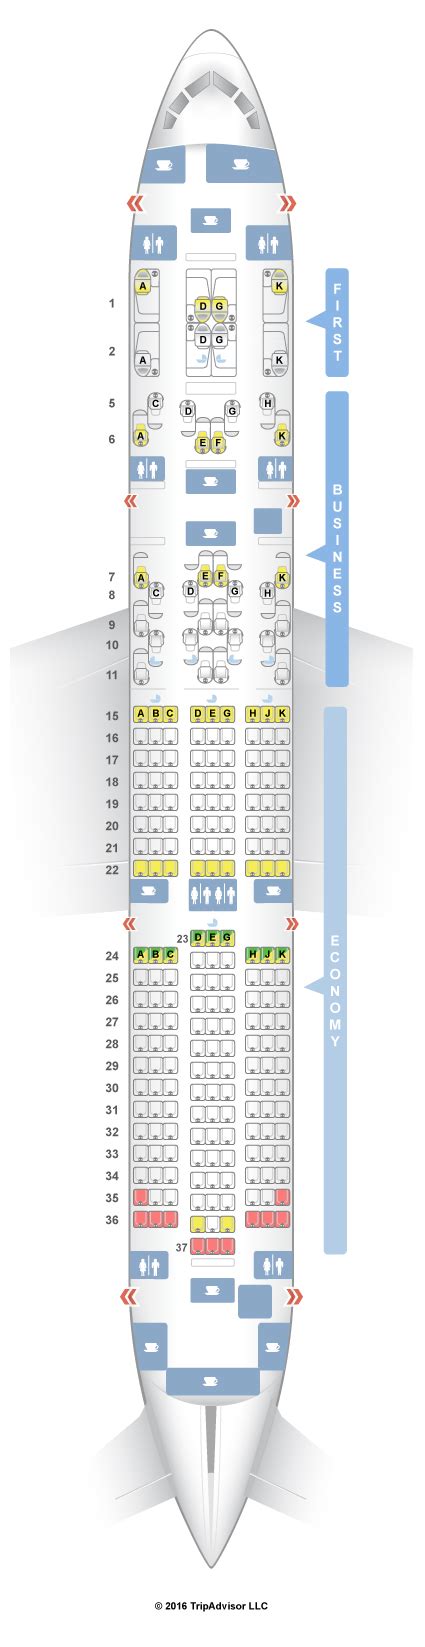 Seatguru Seat Map Etihad Boeing 787 9 789 V1